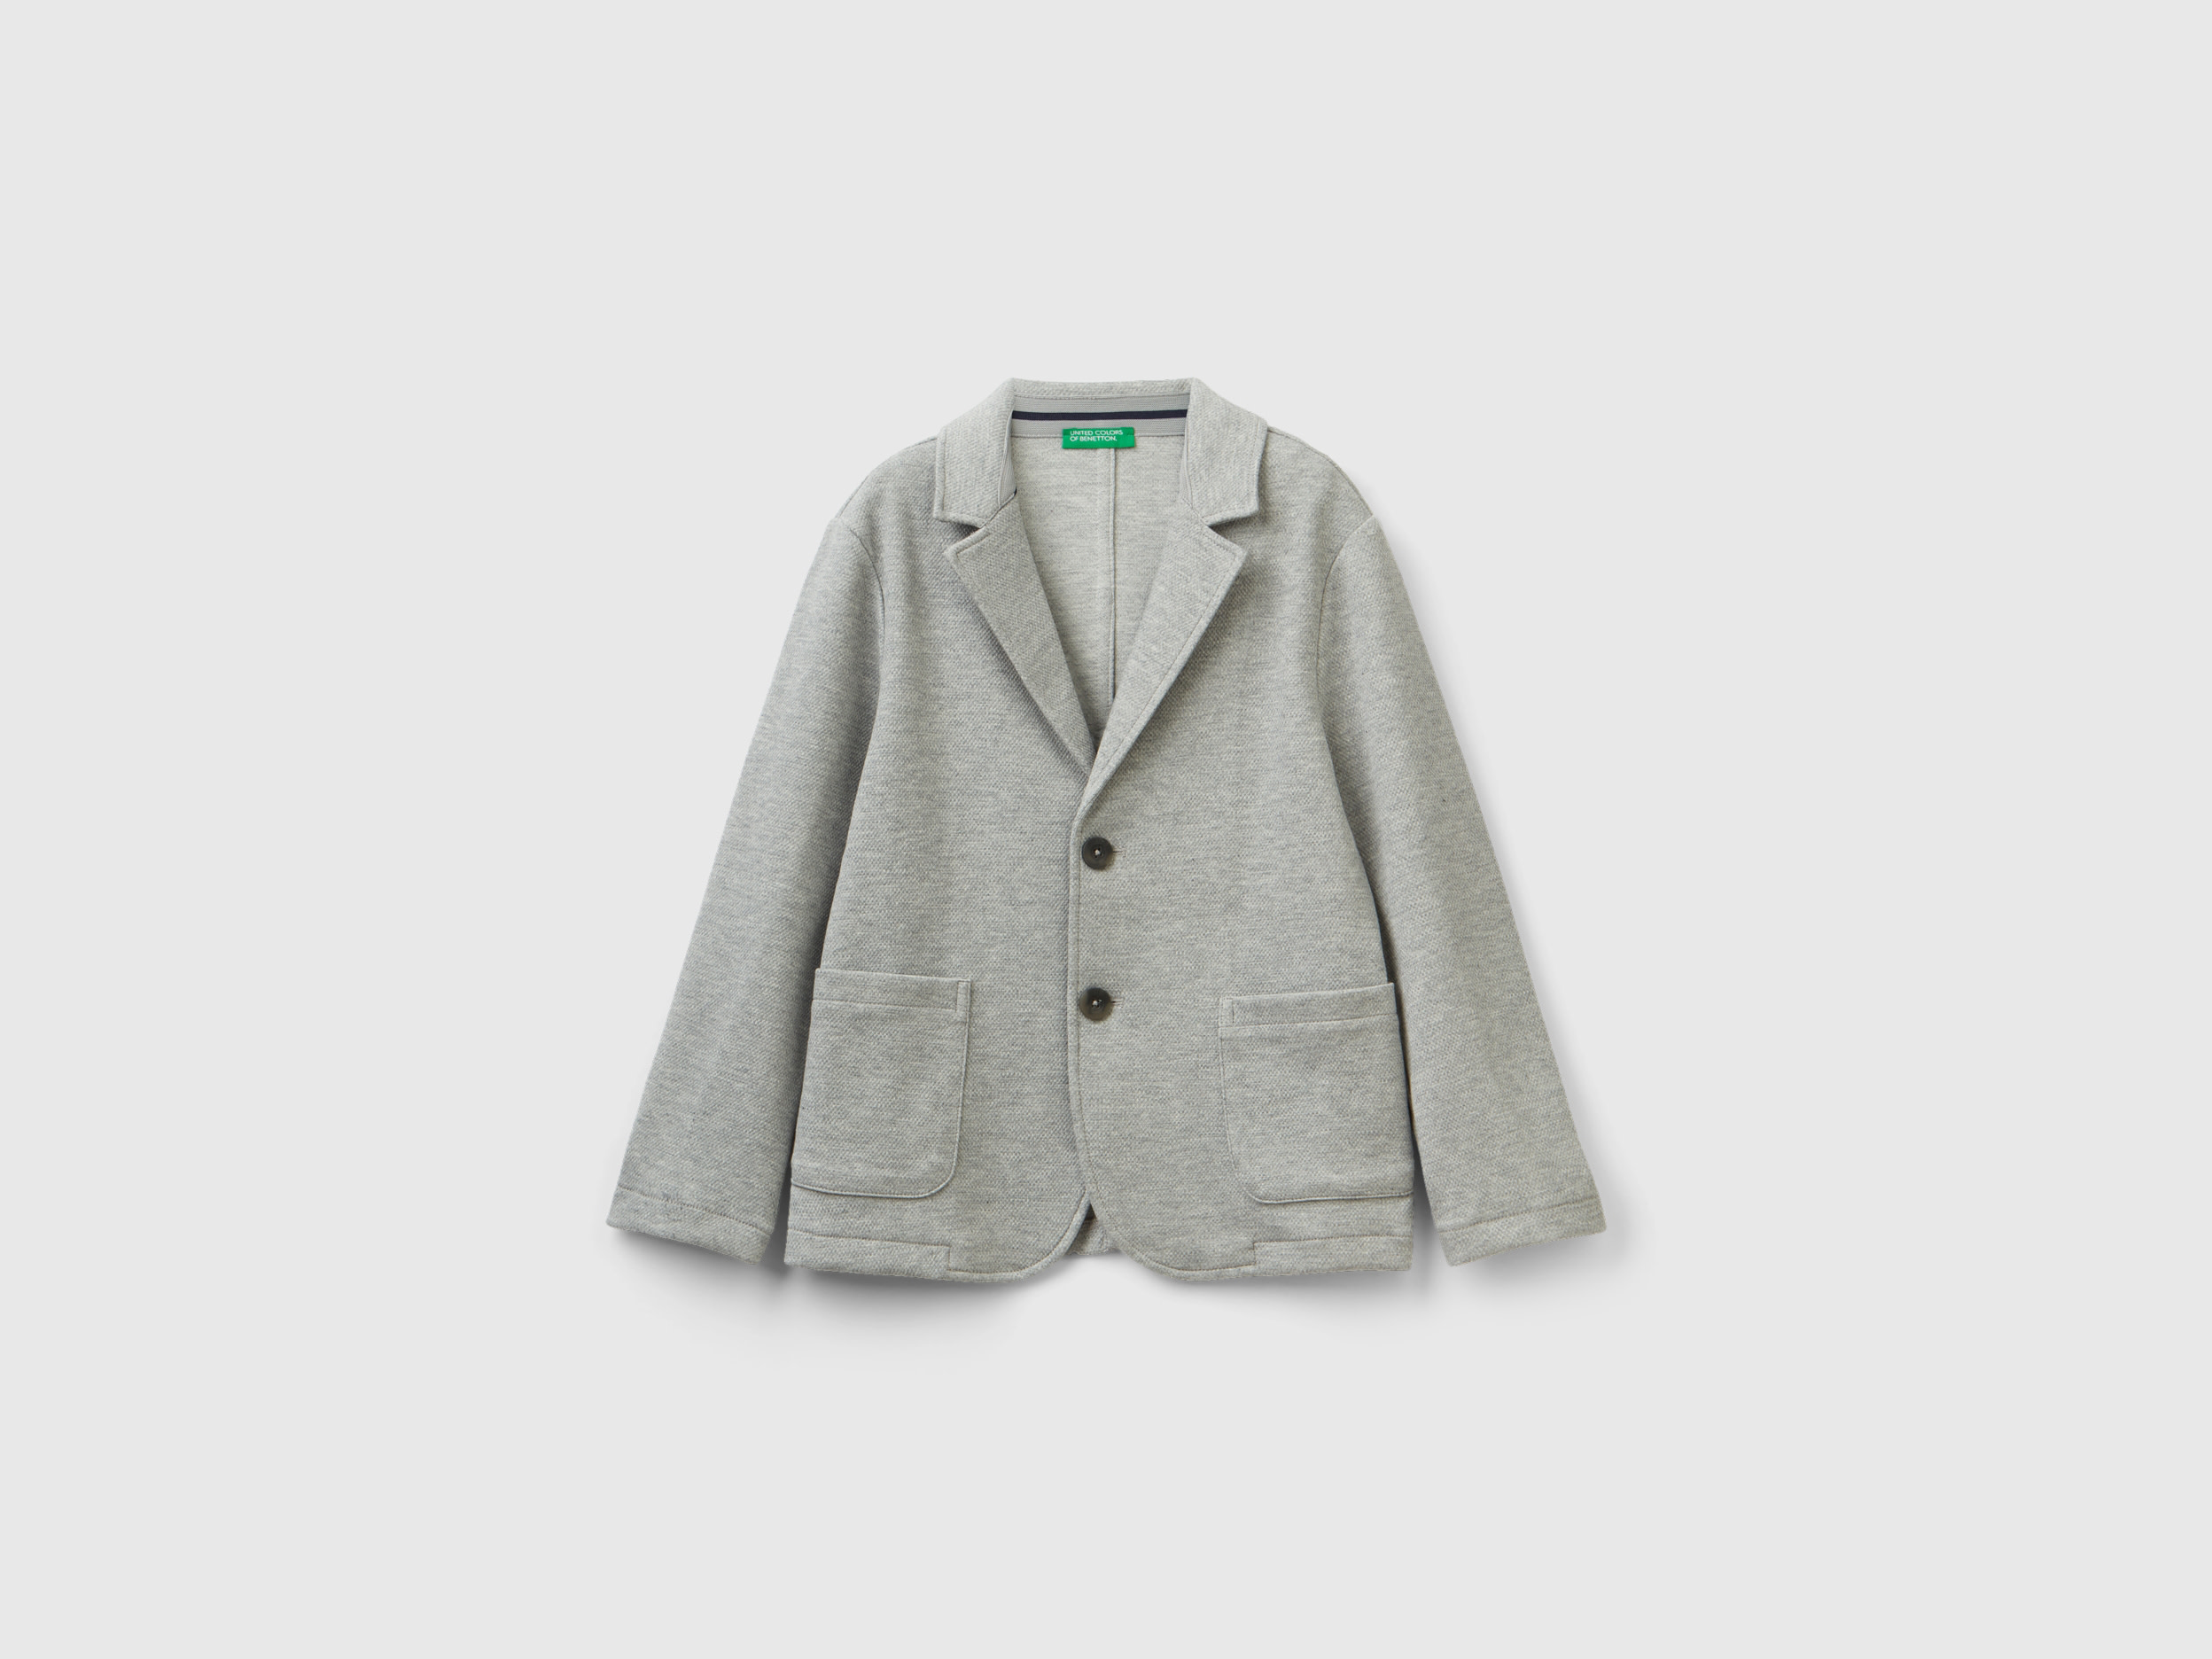 Benetton, Slim Fit Blazer With Pockets, size S, Light Gray, Kids